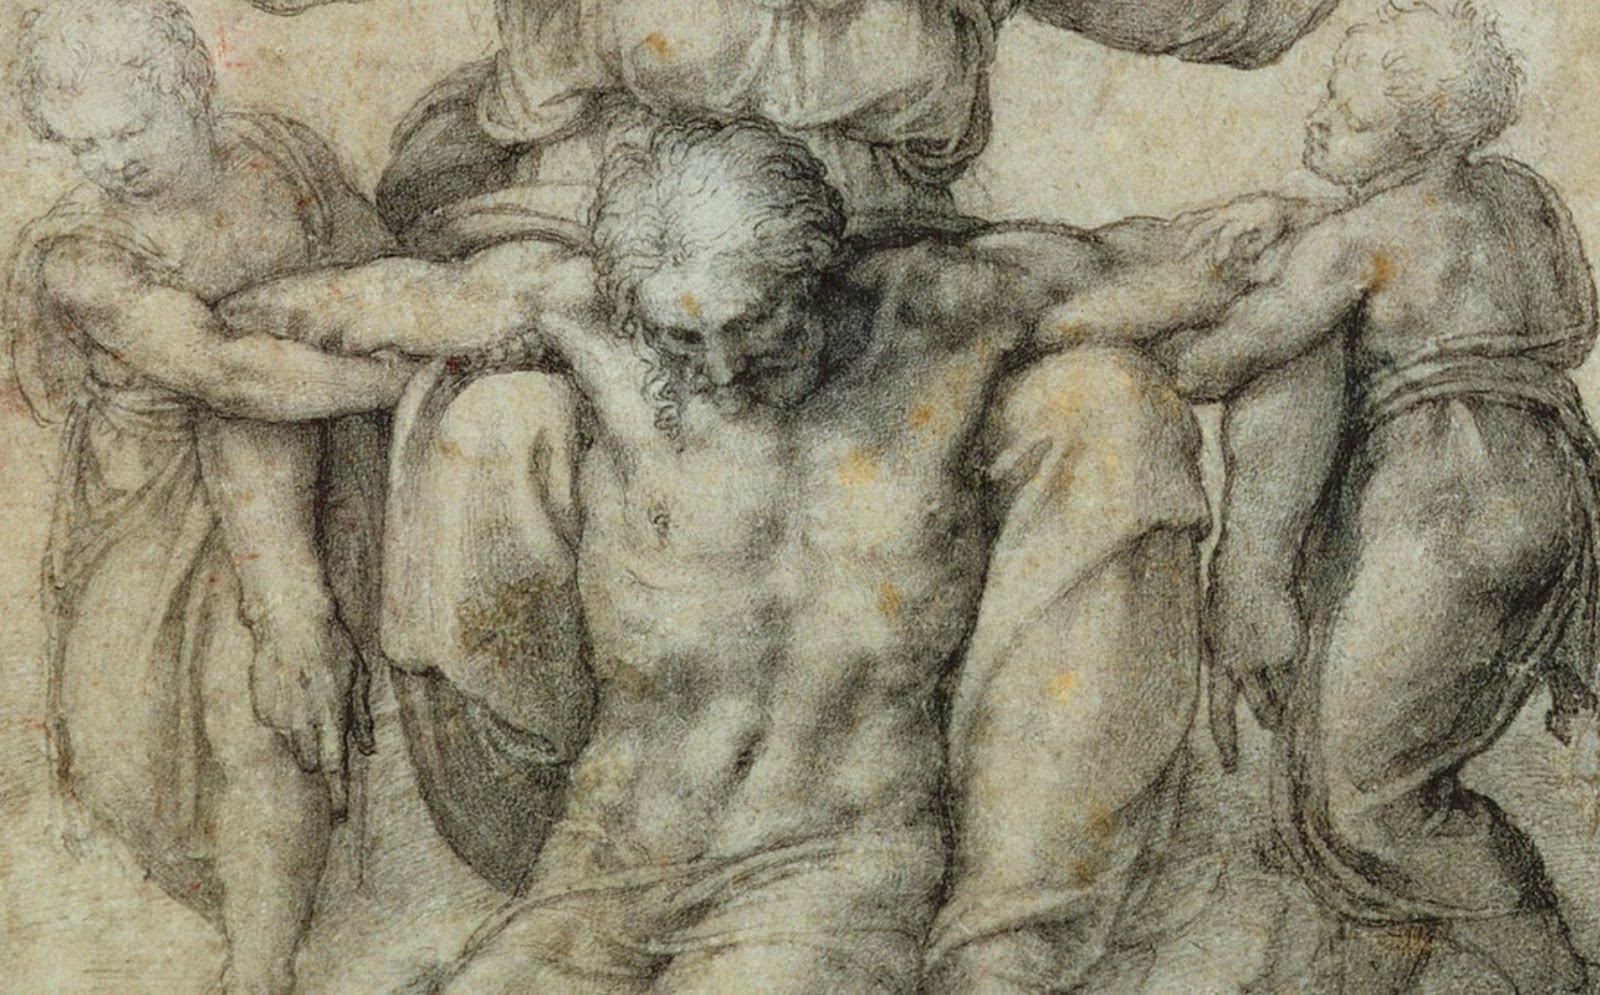 Michelangelo+Buonarroti-1475-1564 (440).jpg